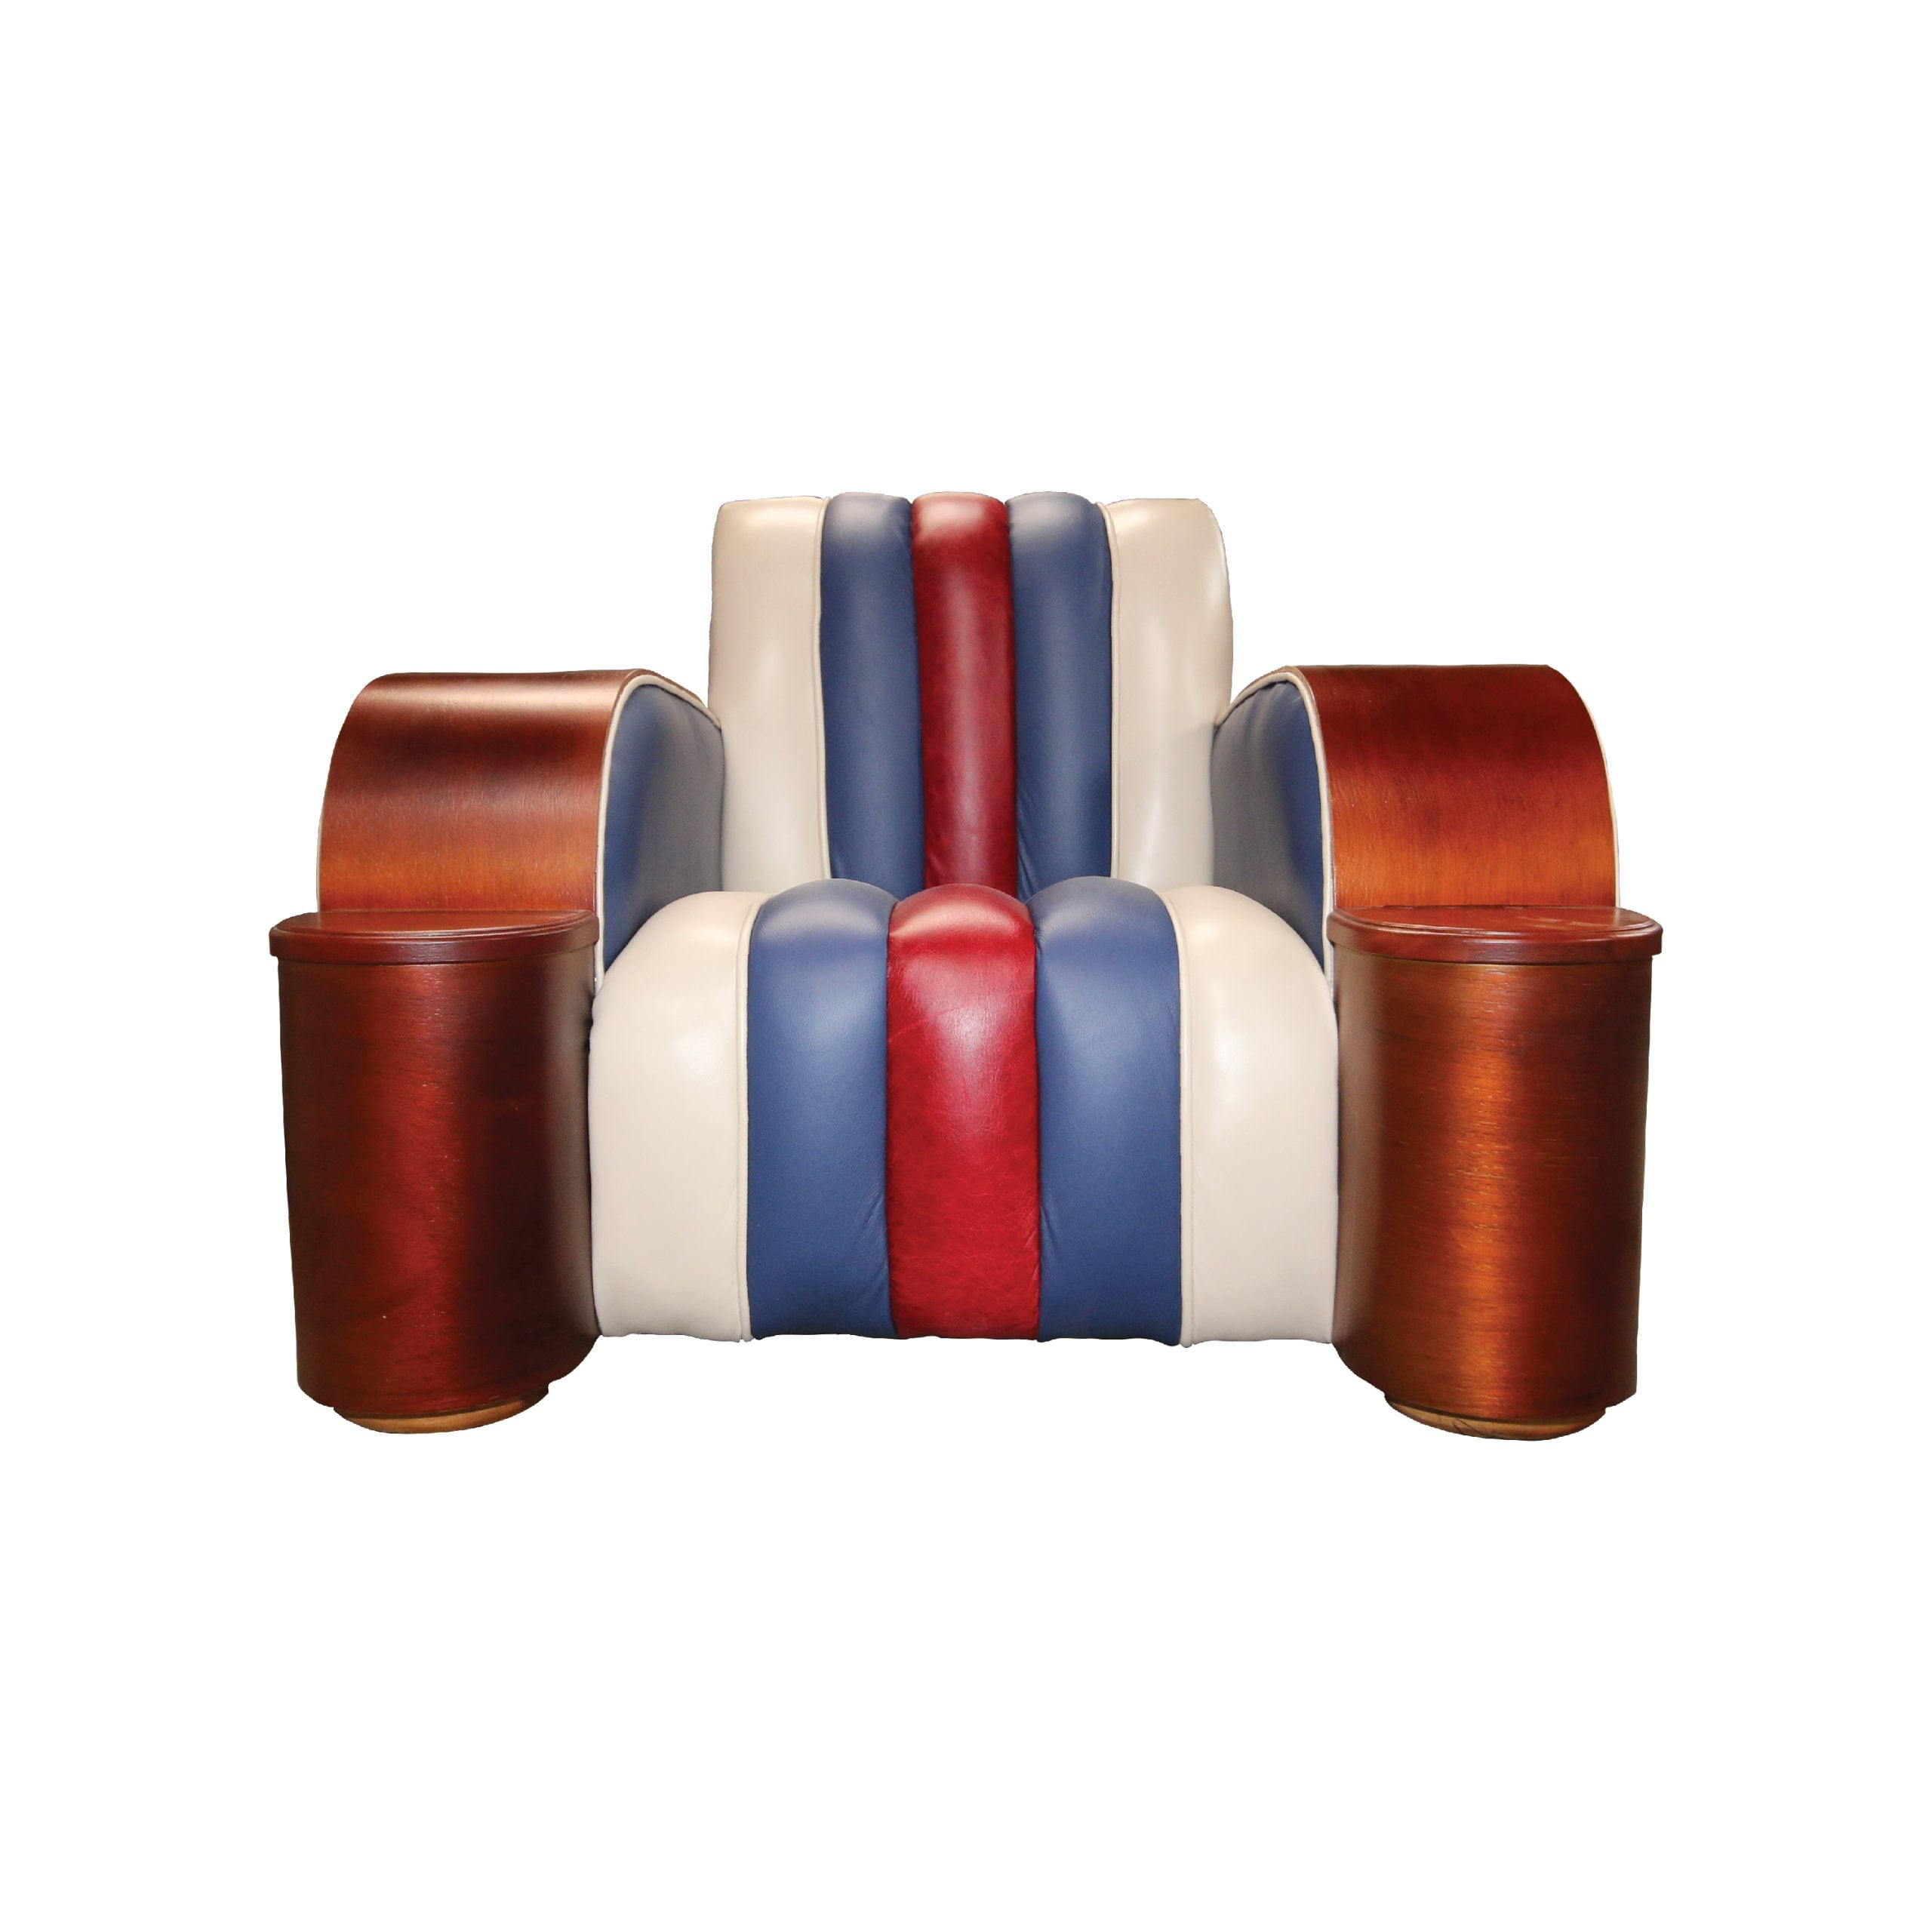 Art Deco arm chairs